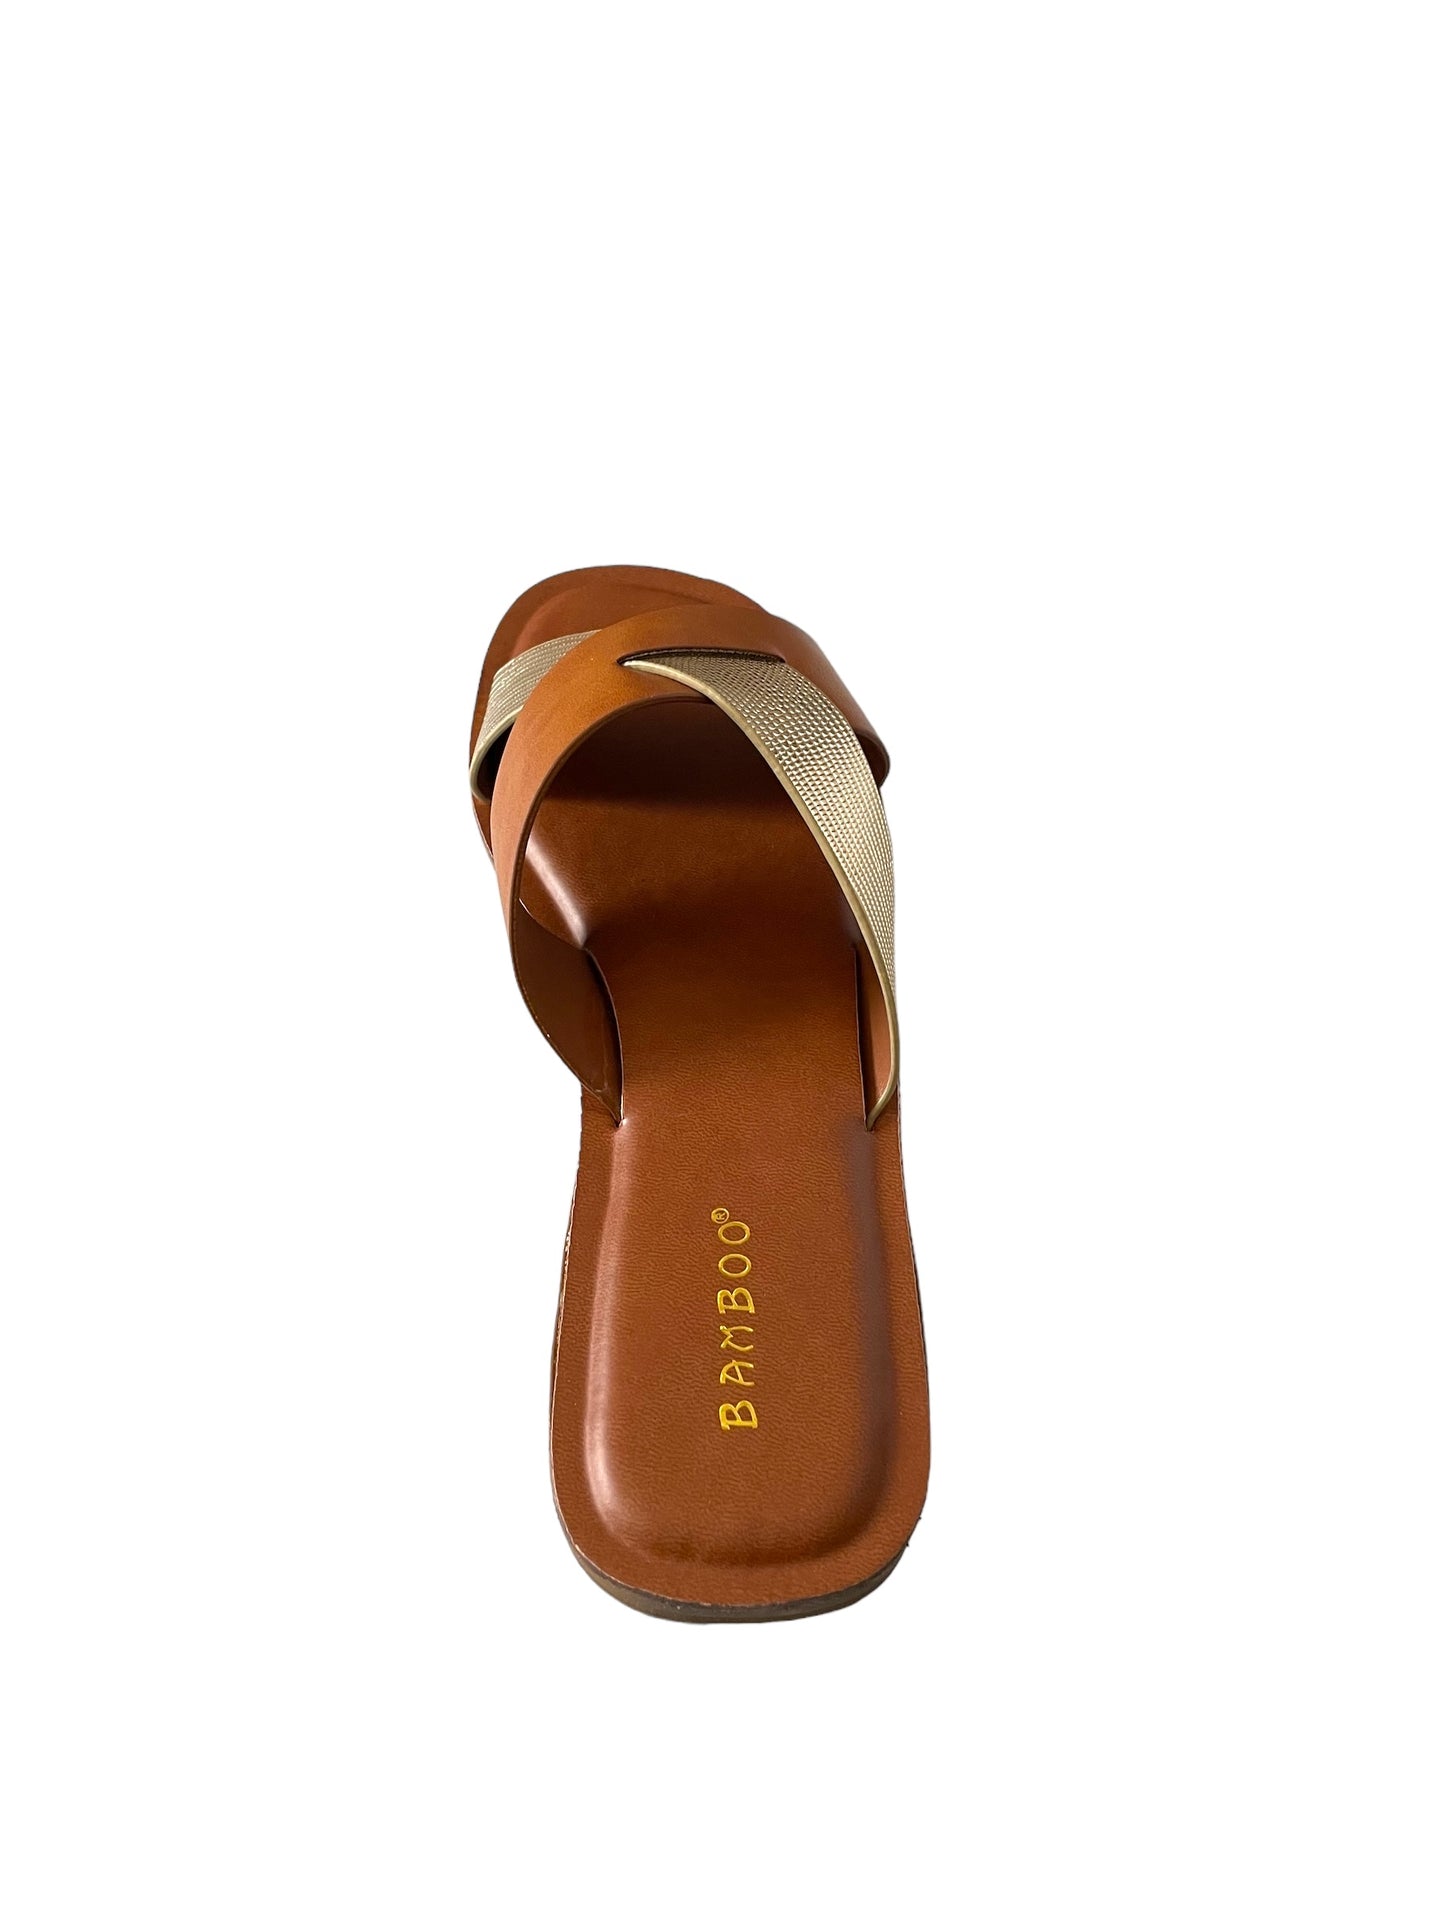 Bamboo Finest-17 Slip on Women's Cross Strap Sandals - Selzalot